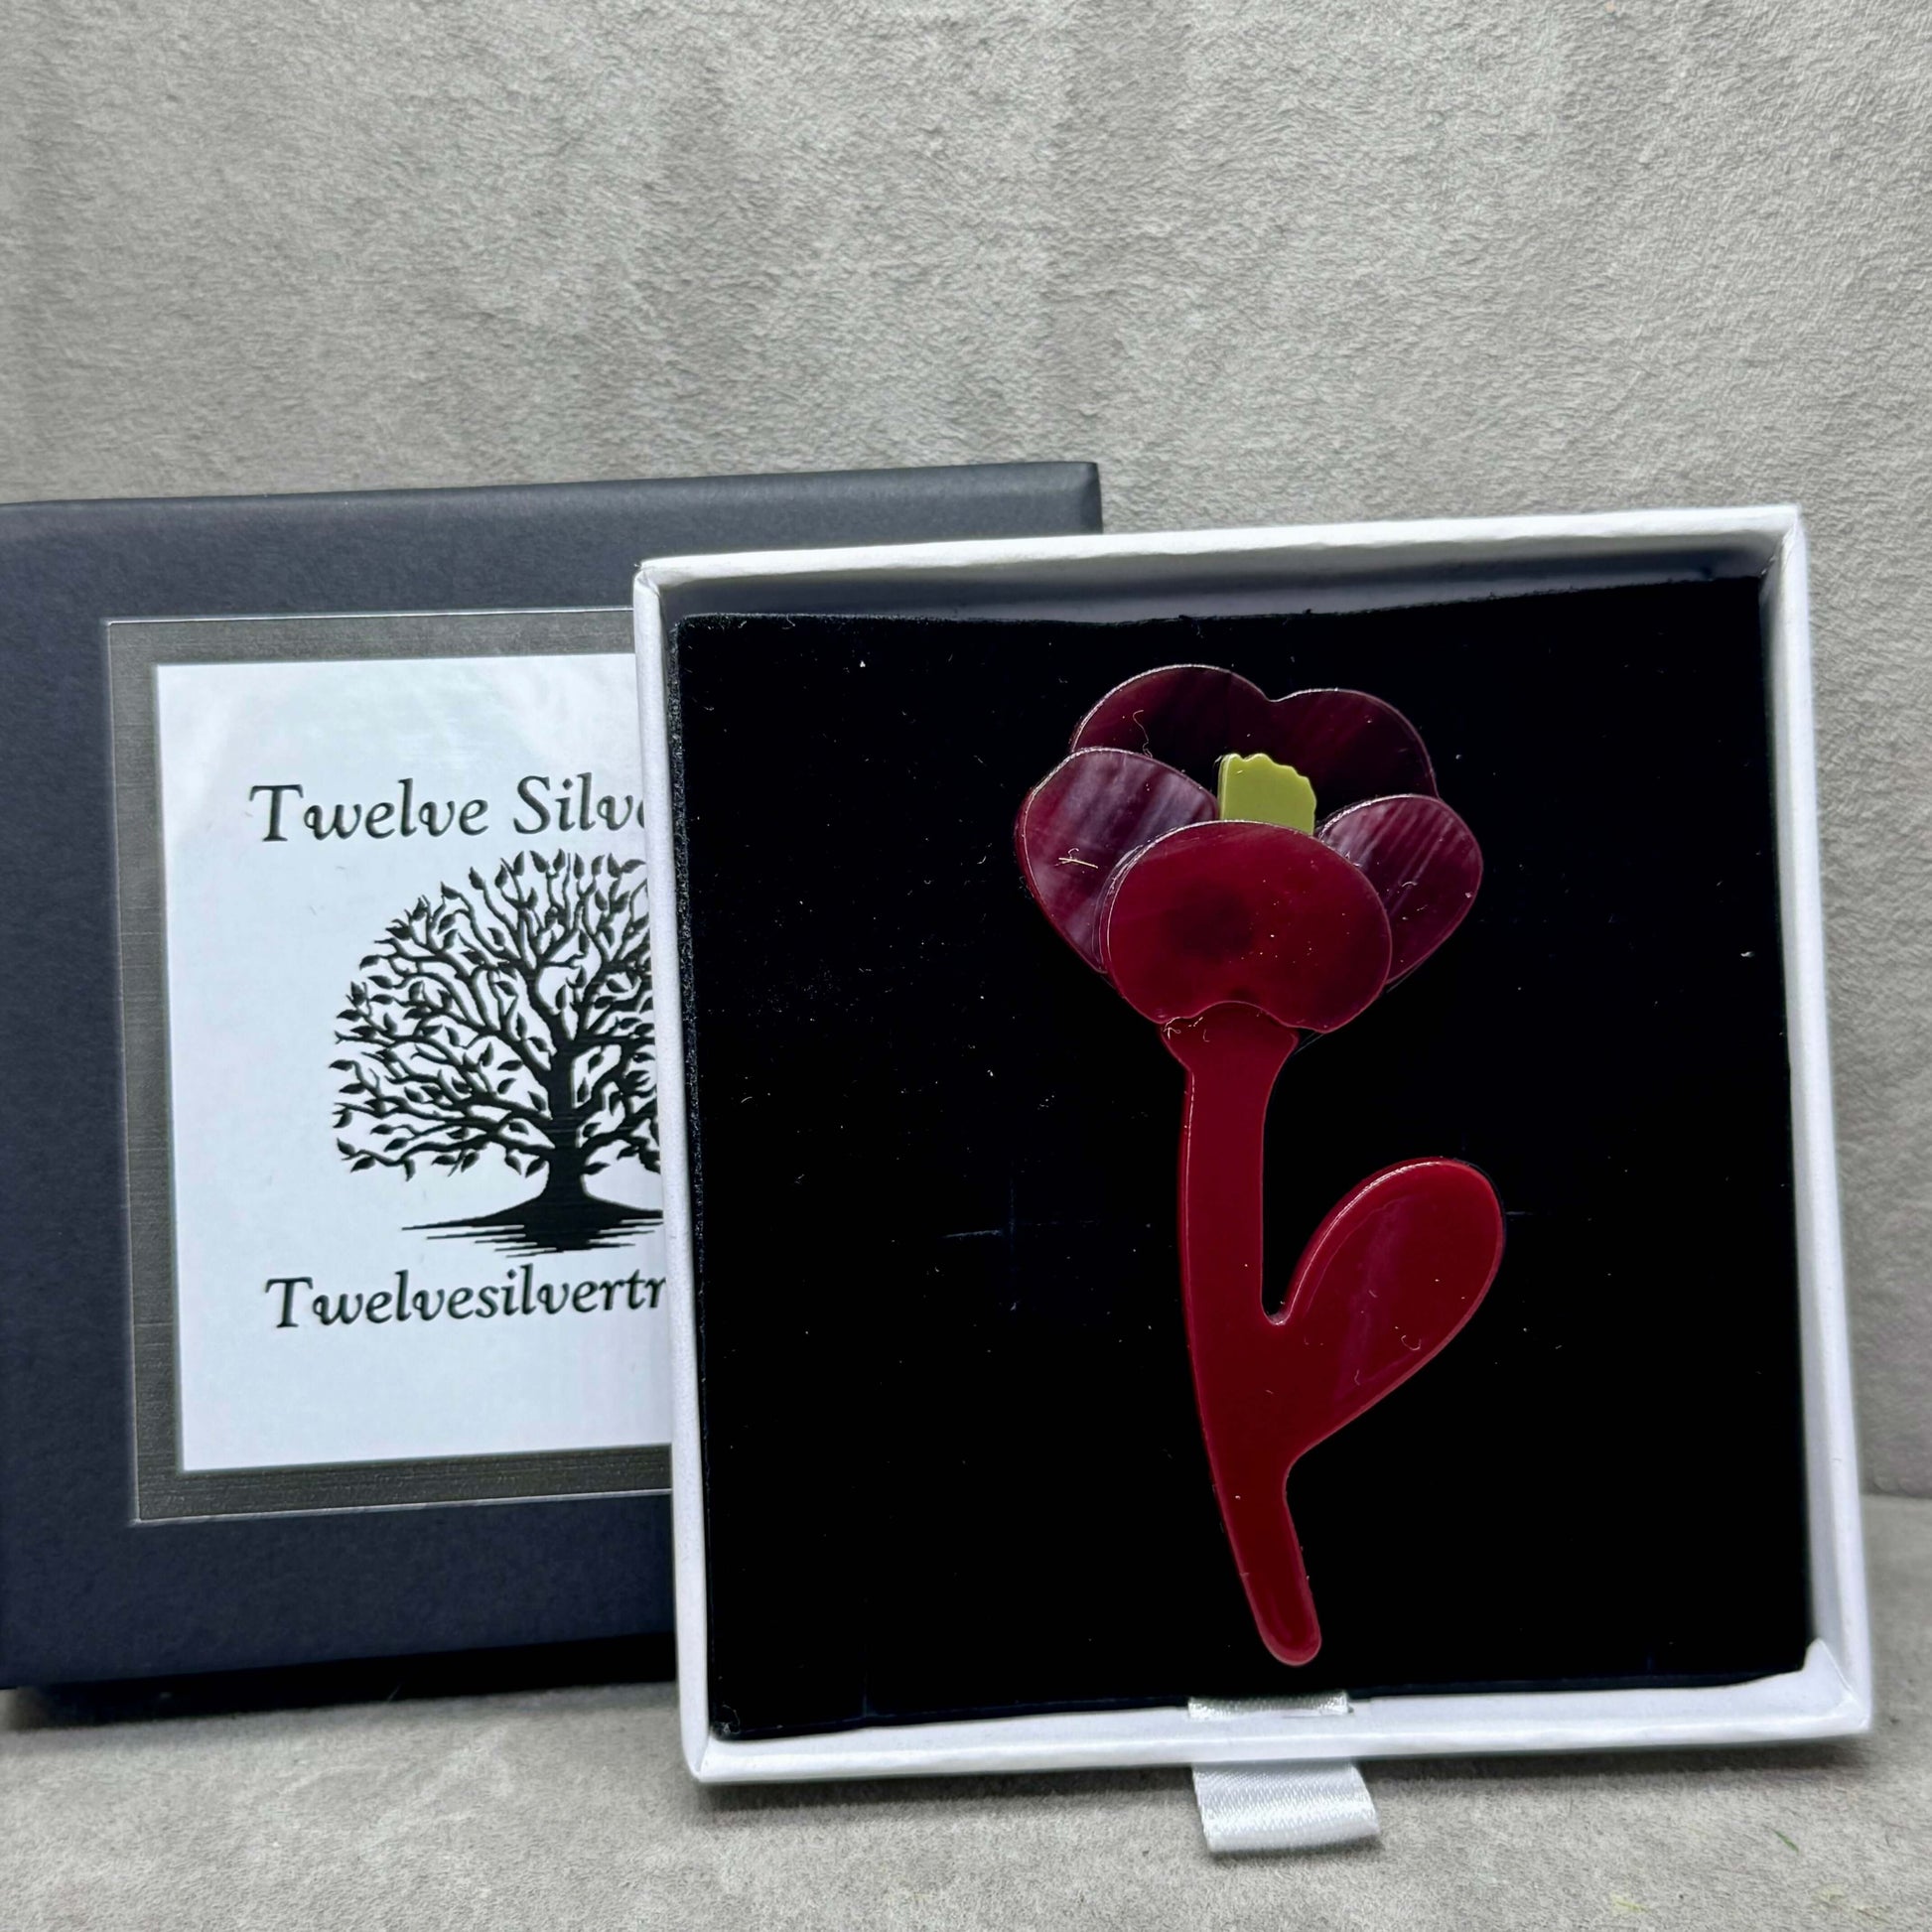 Handmade Acrylic Art Brooch - The Deco Red Flower - Twelve Silver Trees